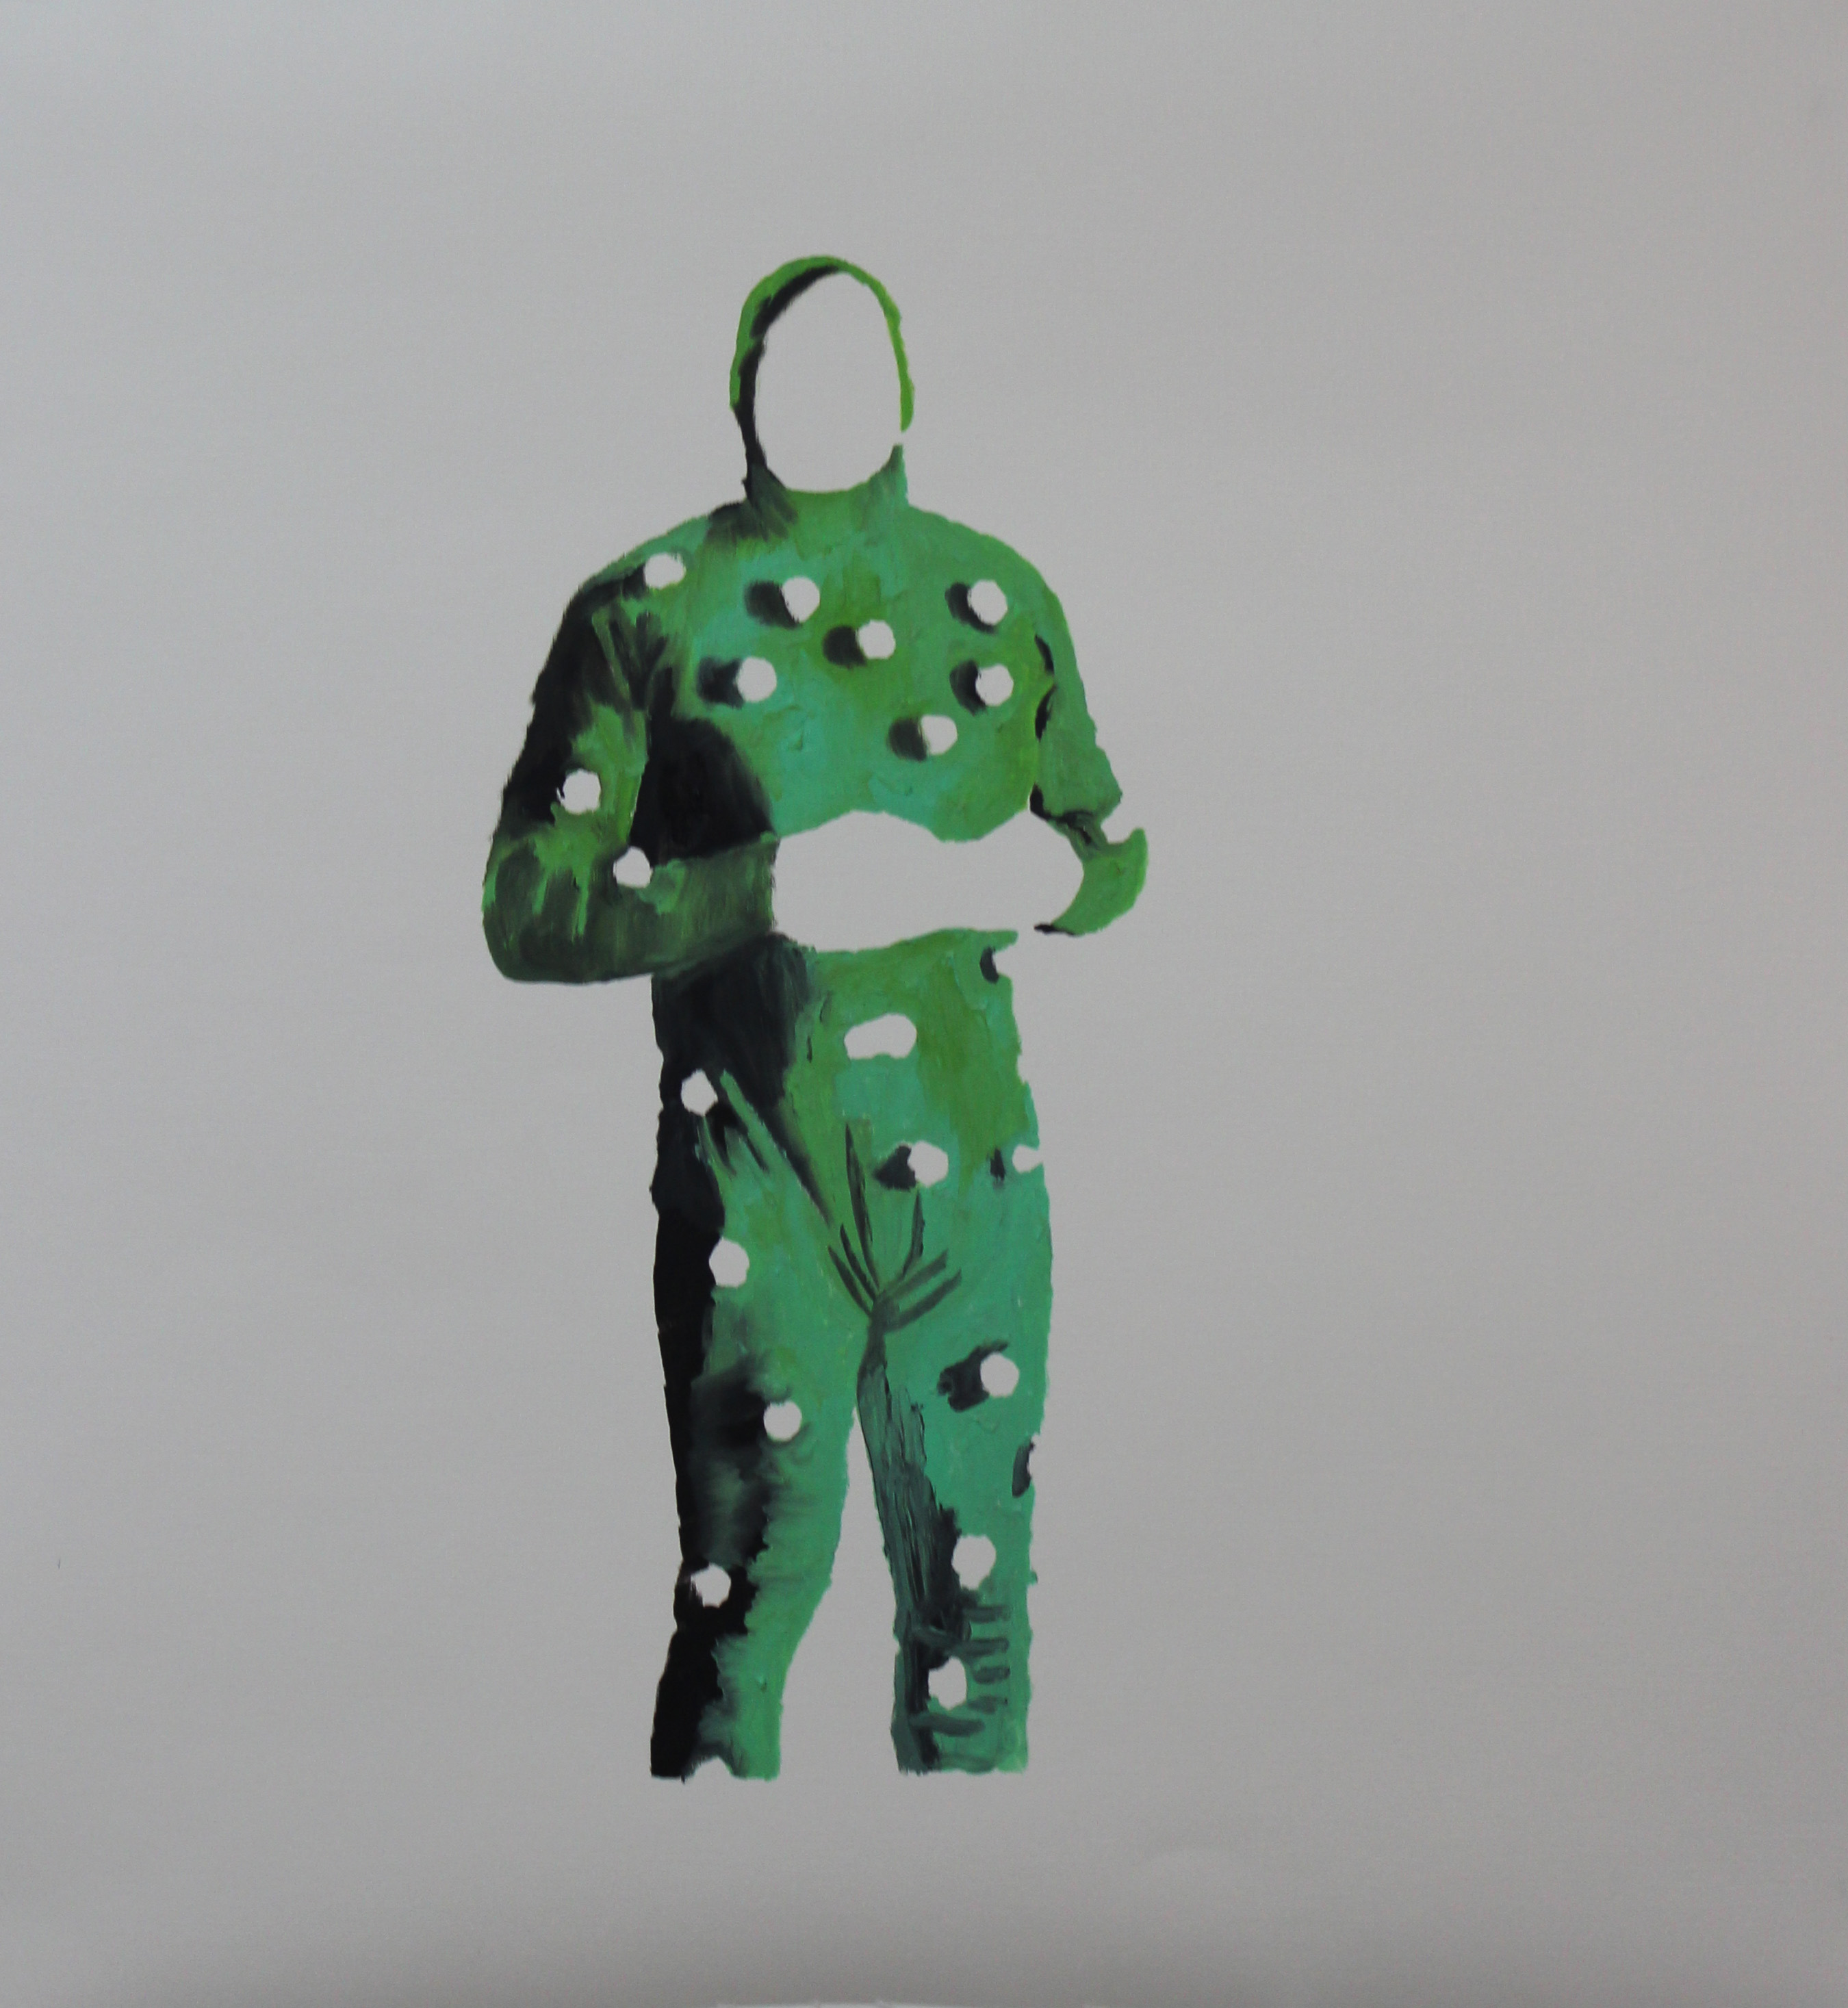 Greenscreen 2, 2016 - Oil on paper 55 x 55cm